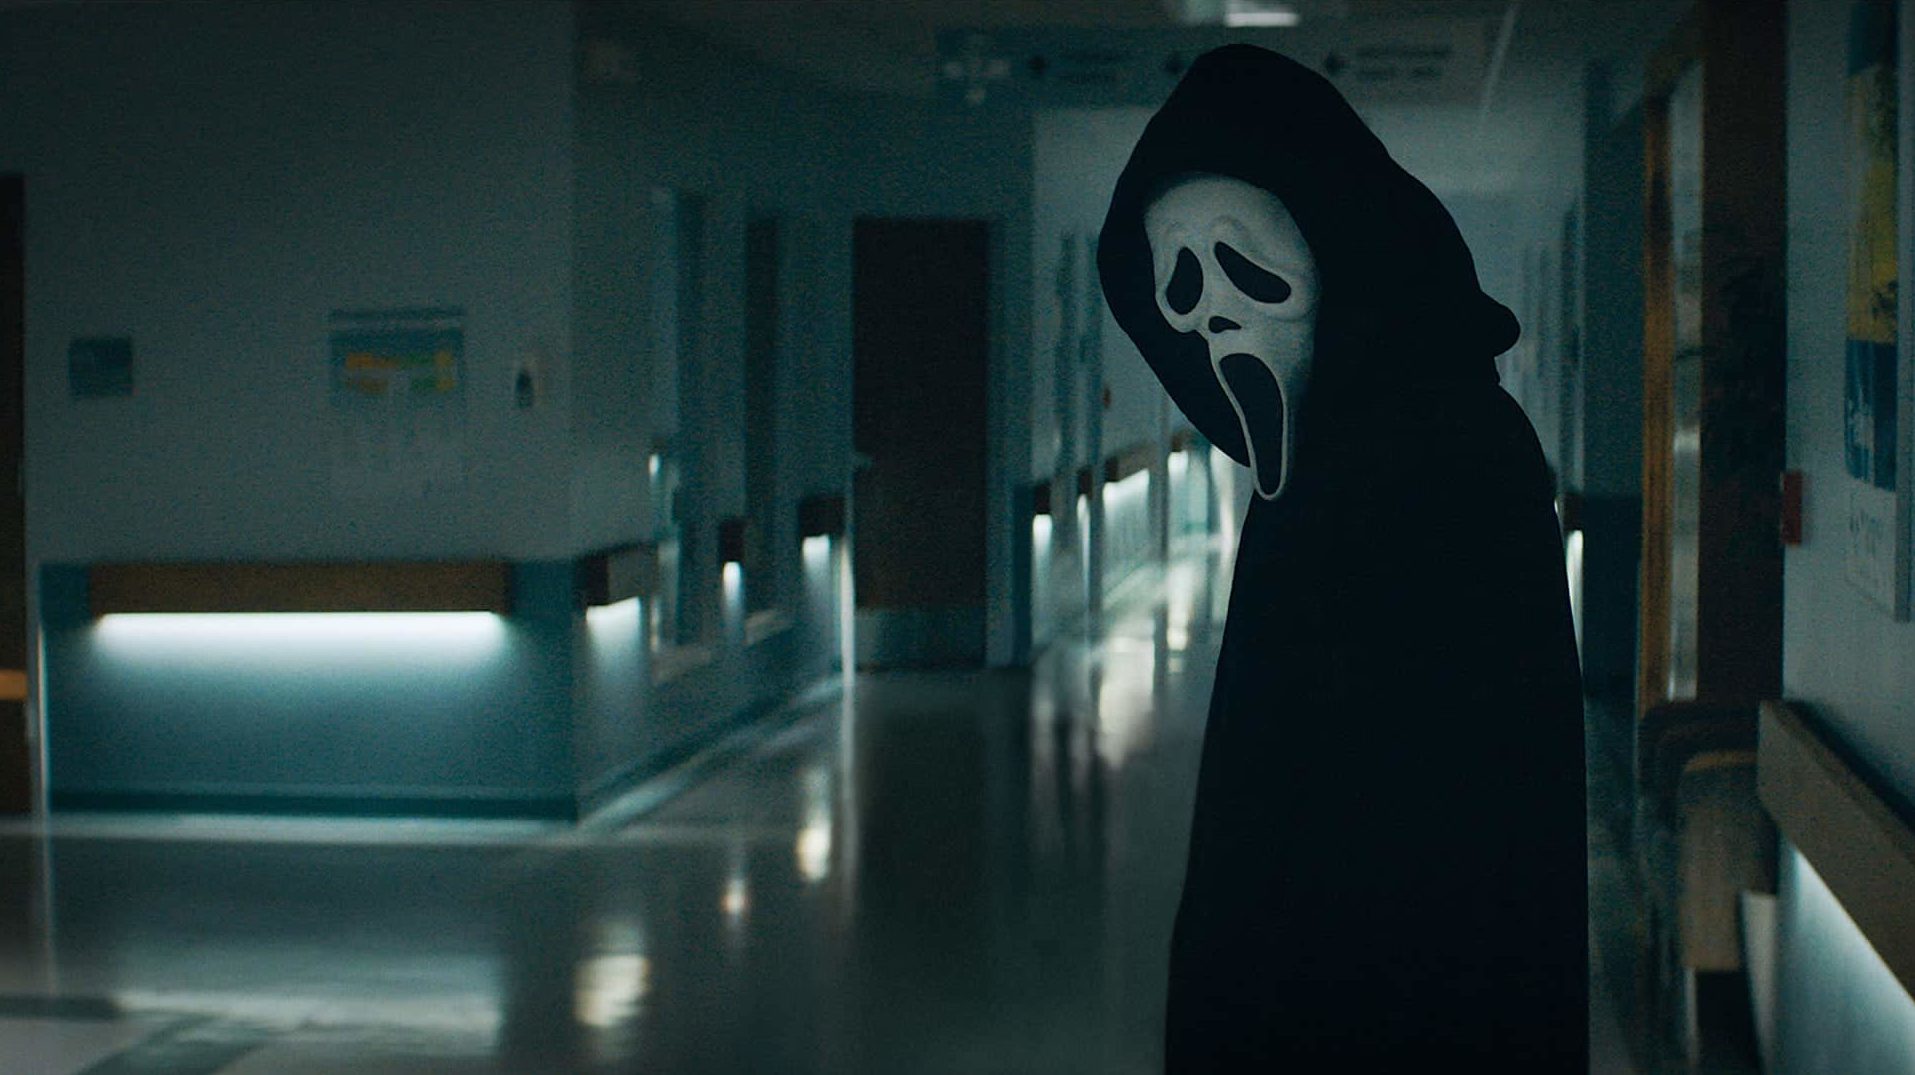 Scream 6 revela a su elenco con nuevo tráiler